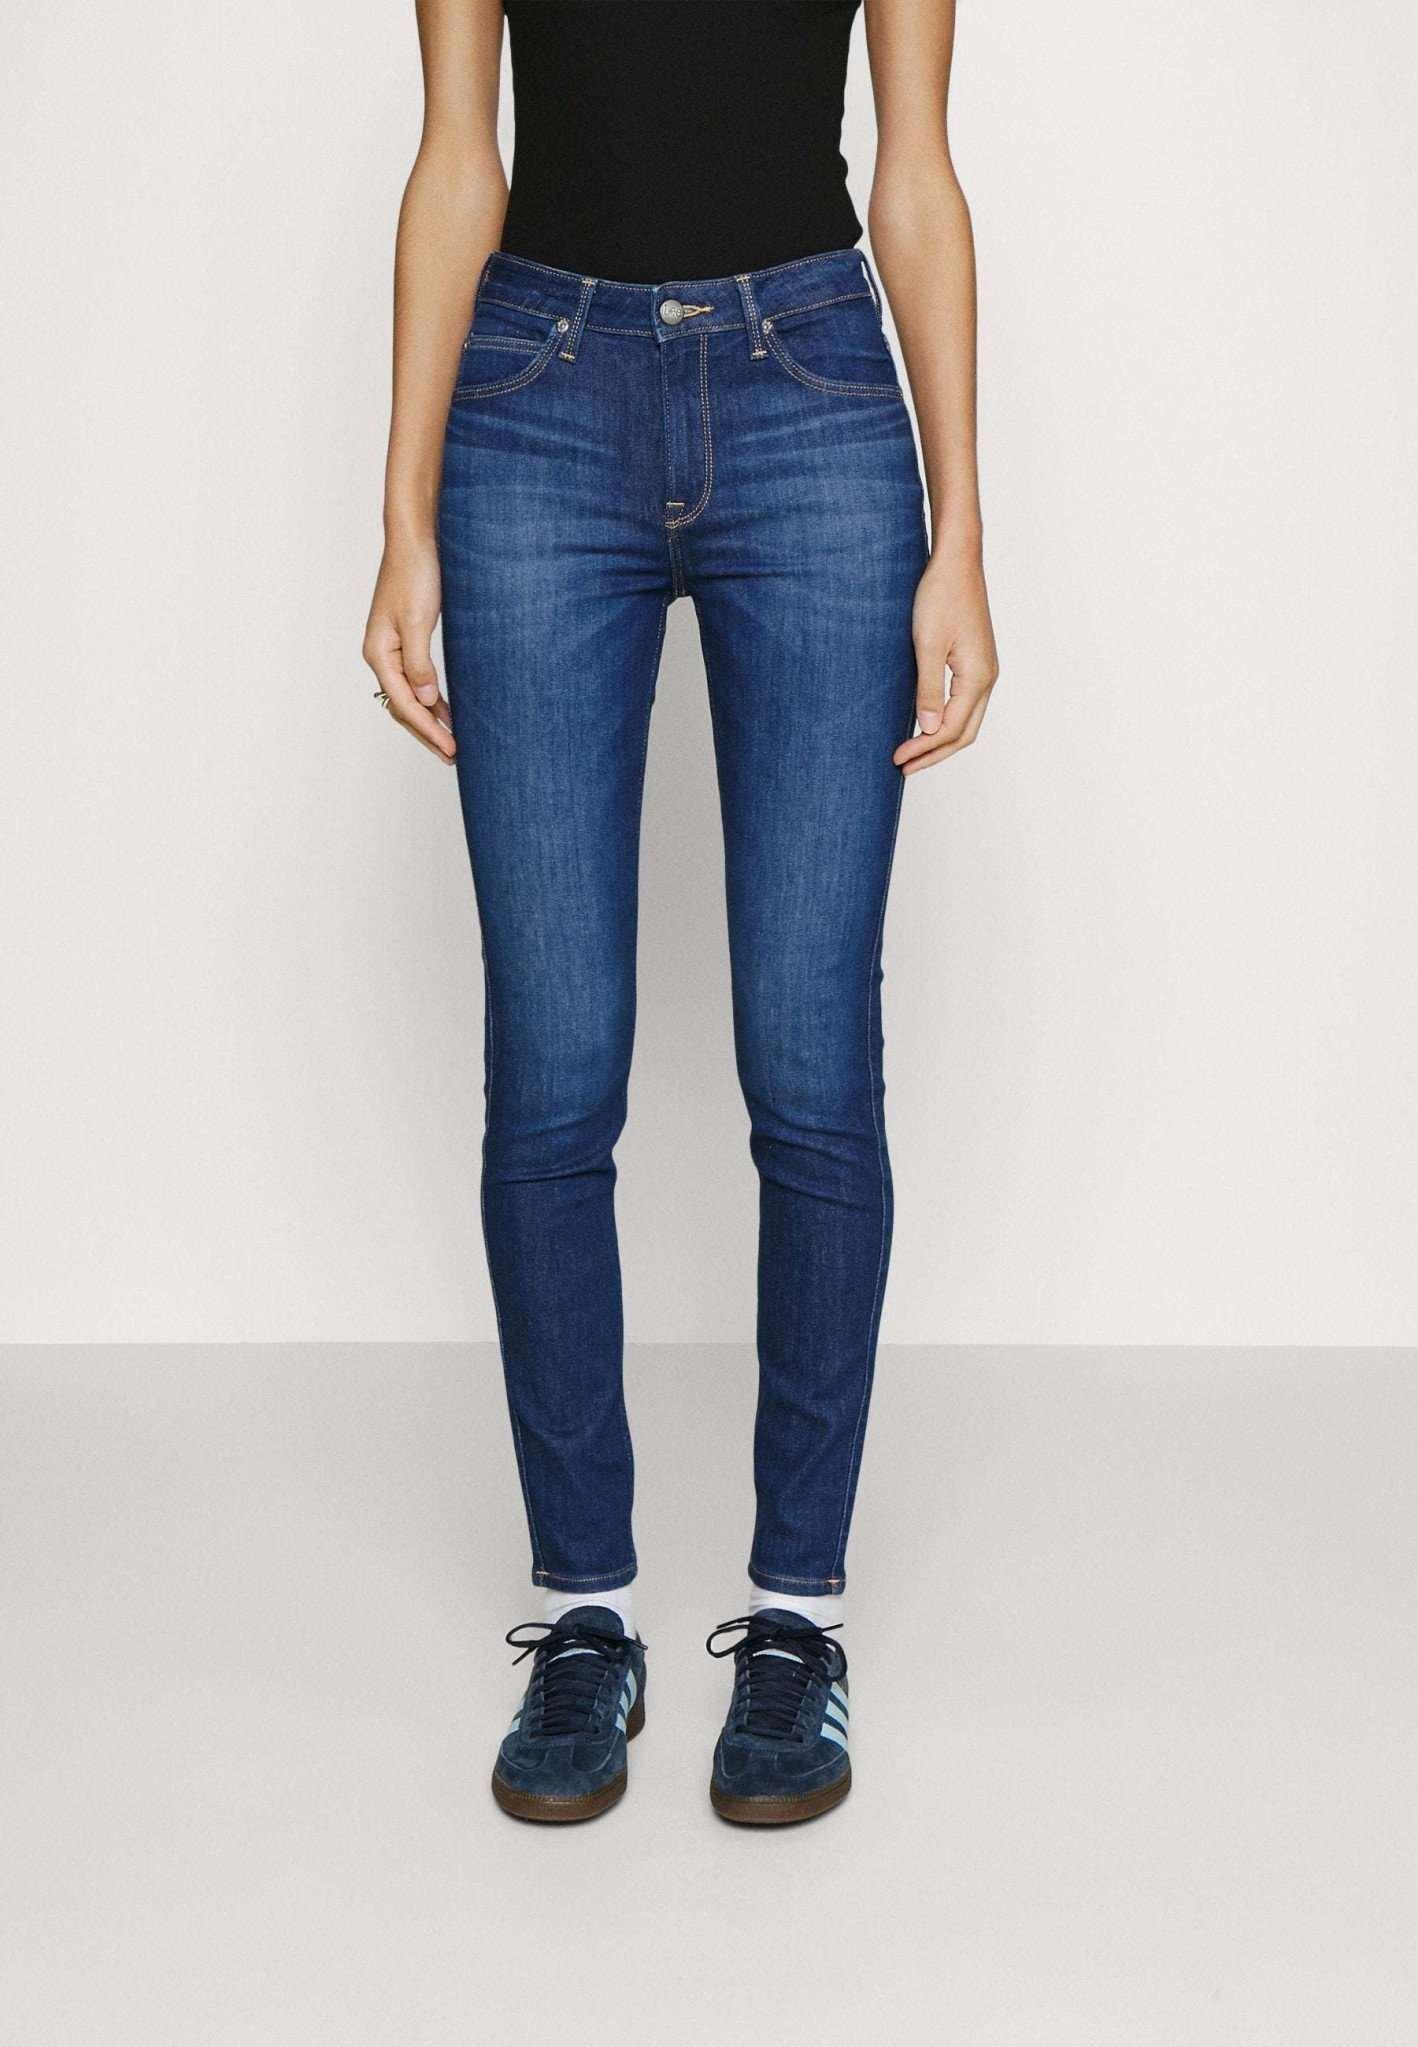 Jeans Skinny Fit Scarlett High Damen Blau L33/W26 von Lee